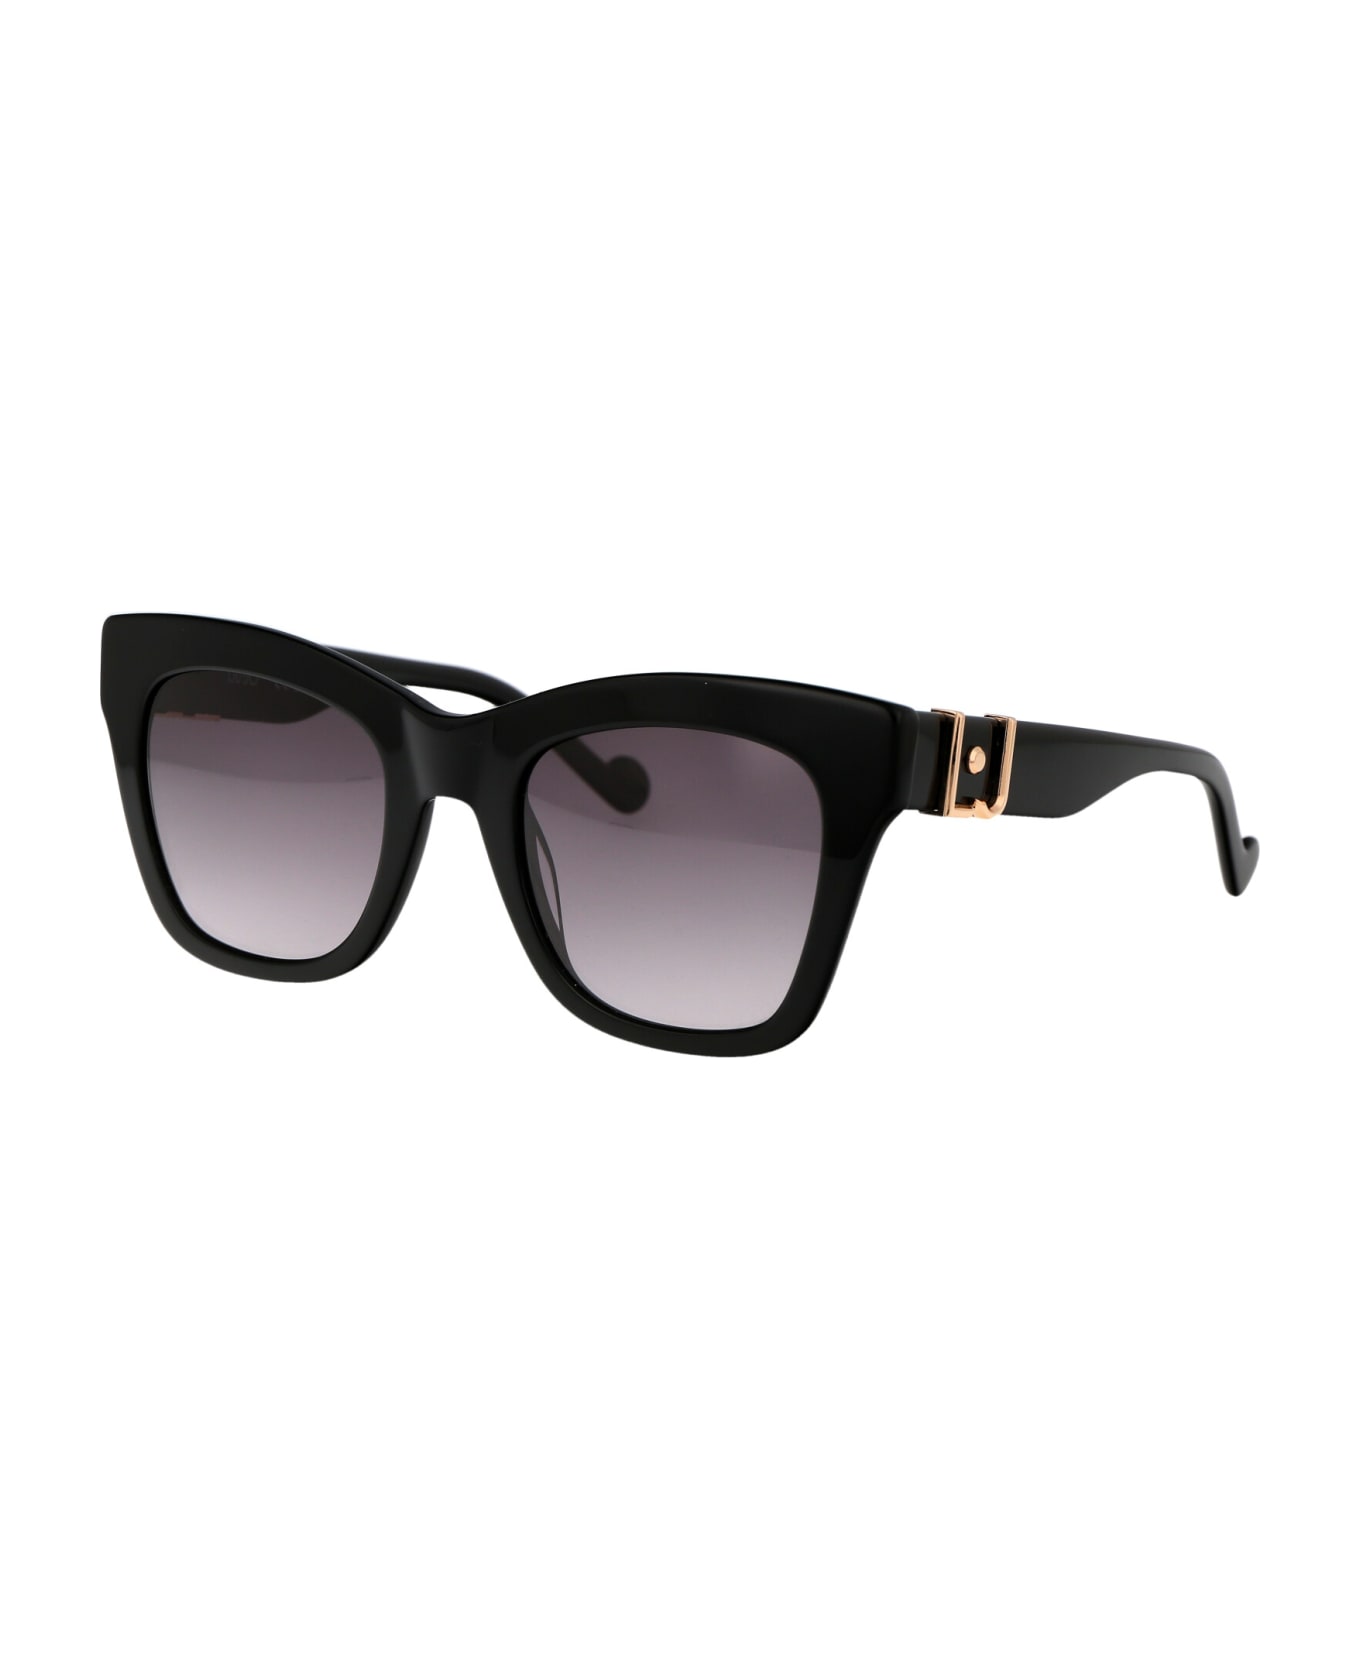 Liu-Jo Lj746s Sunglasses - 001 BLACK